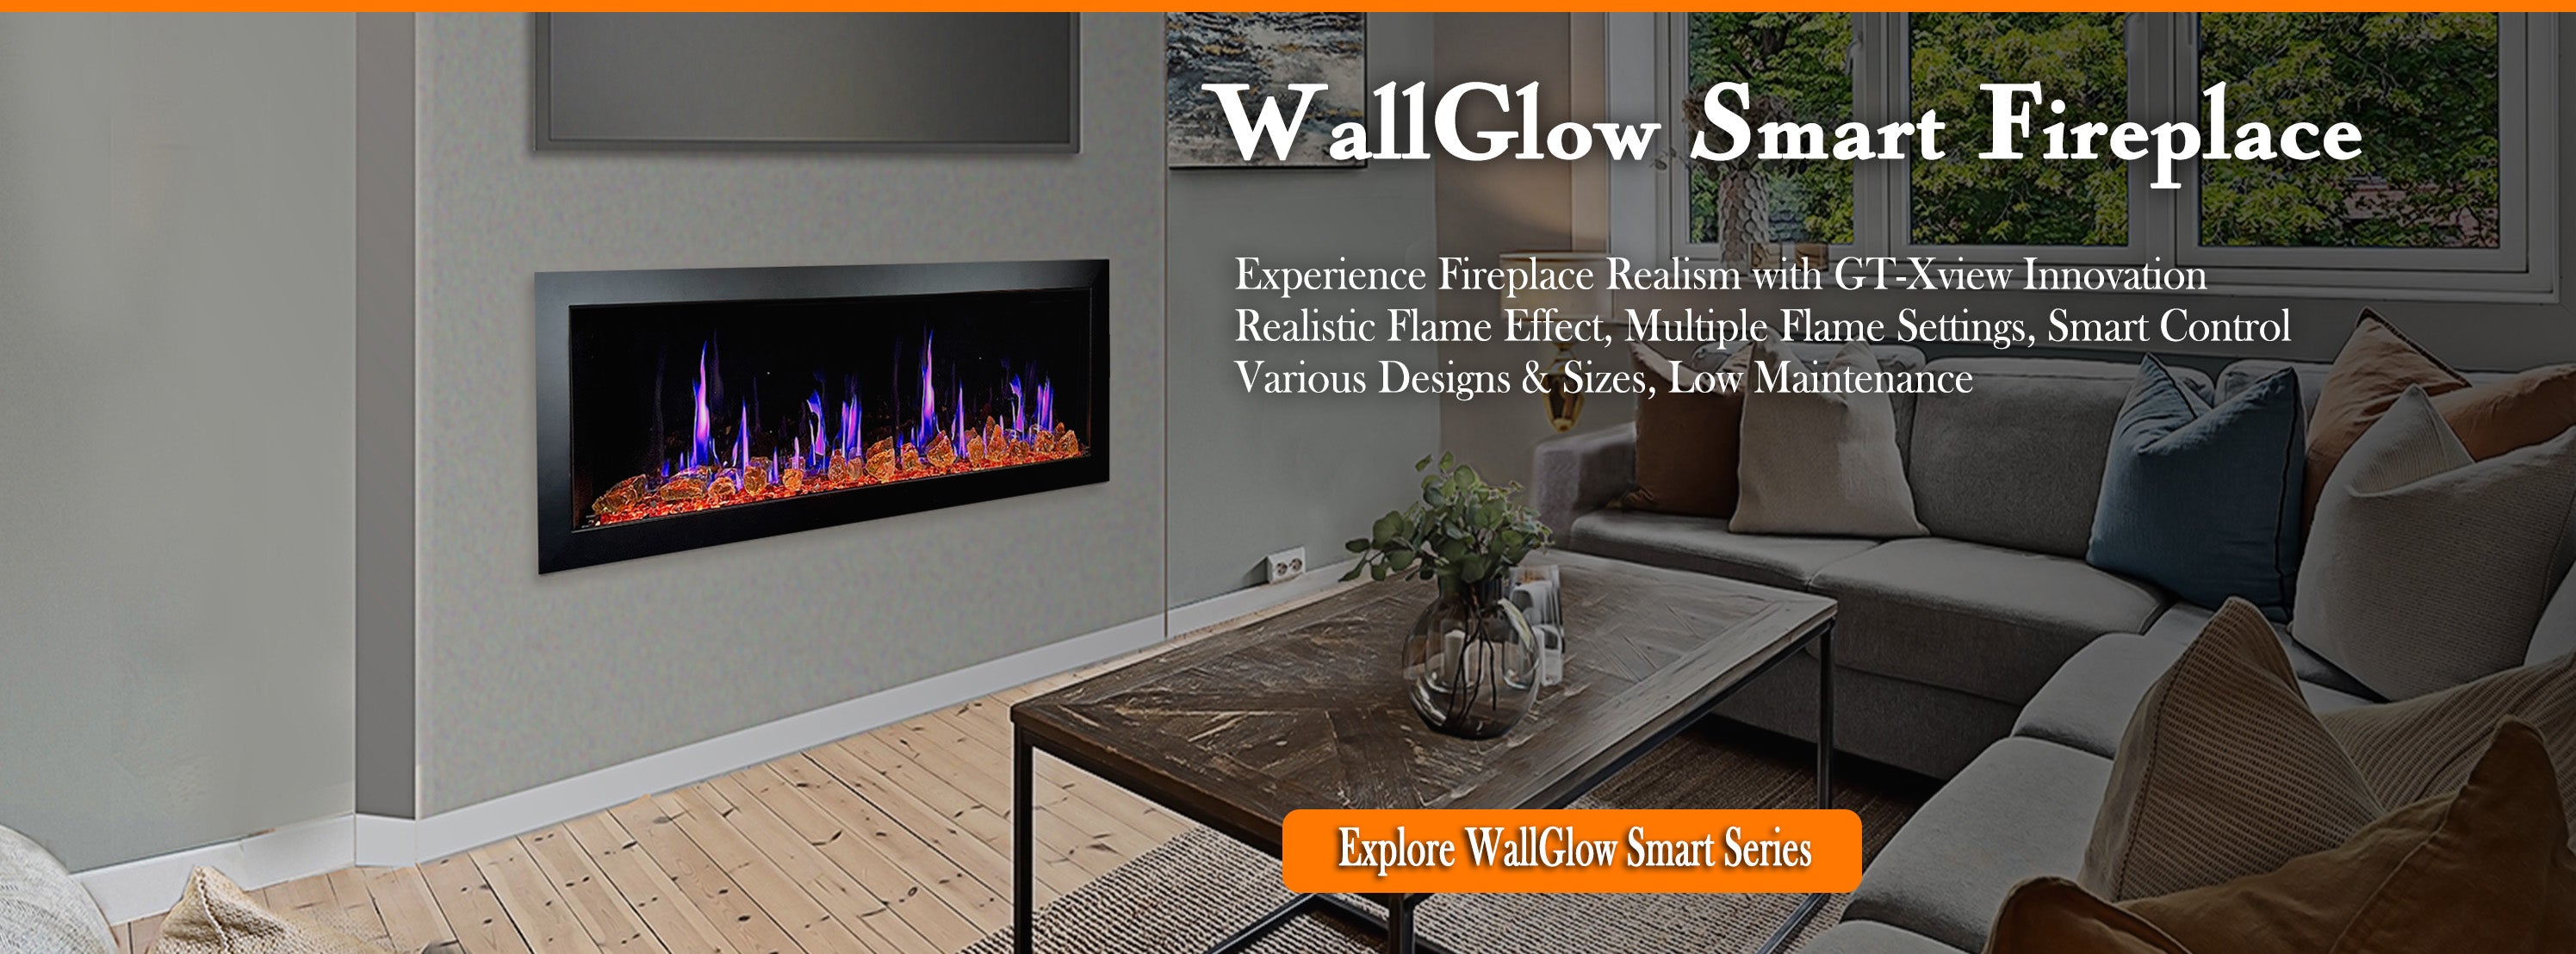 Explore WallGlow Smart Series-electric fireplace 55inch 